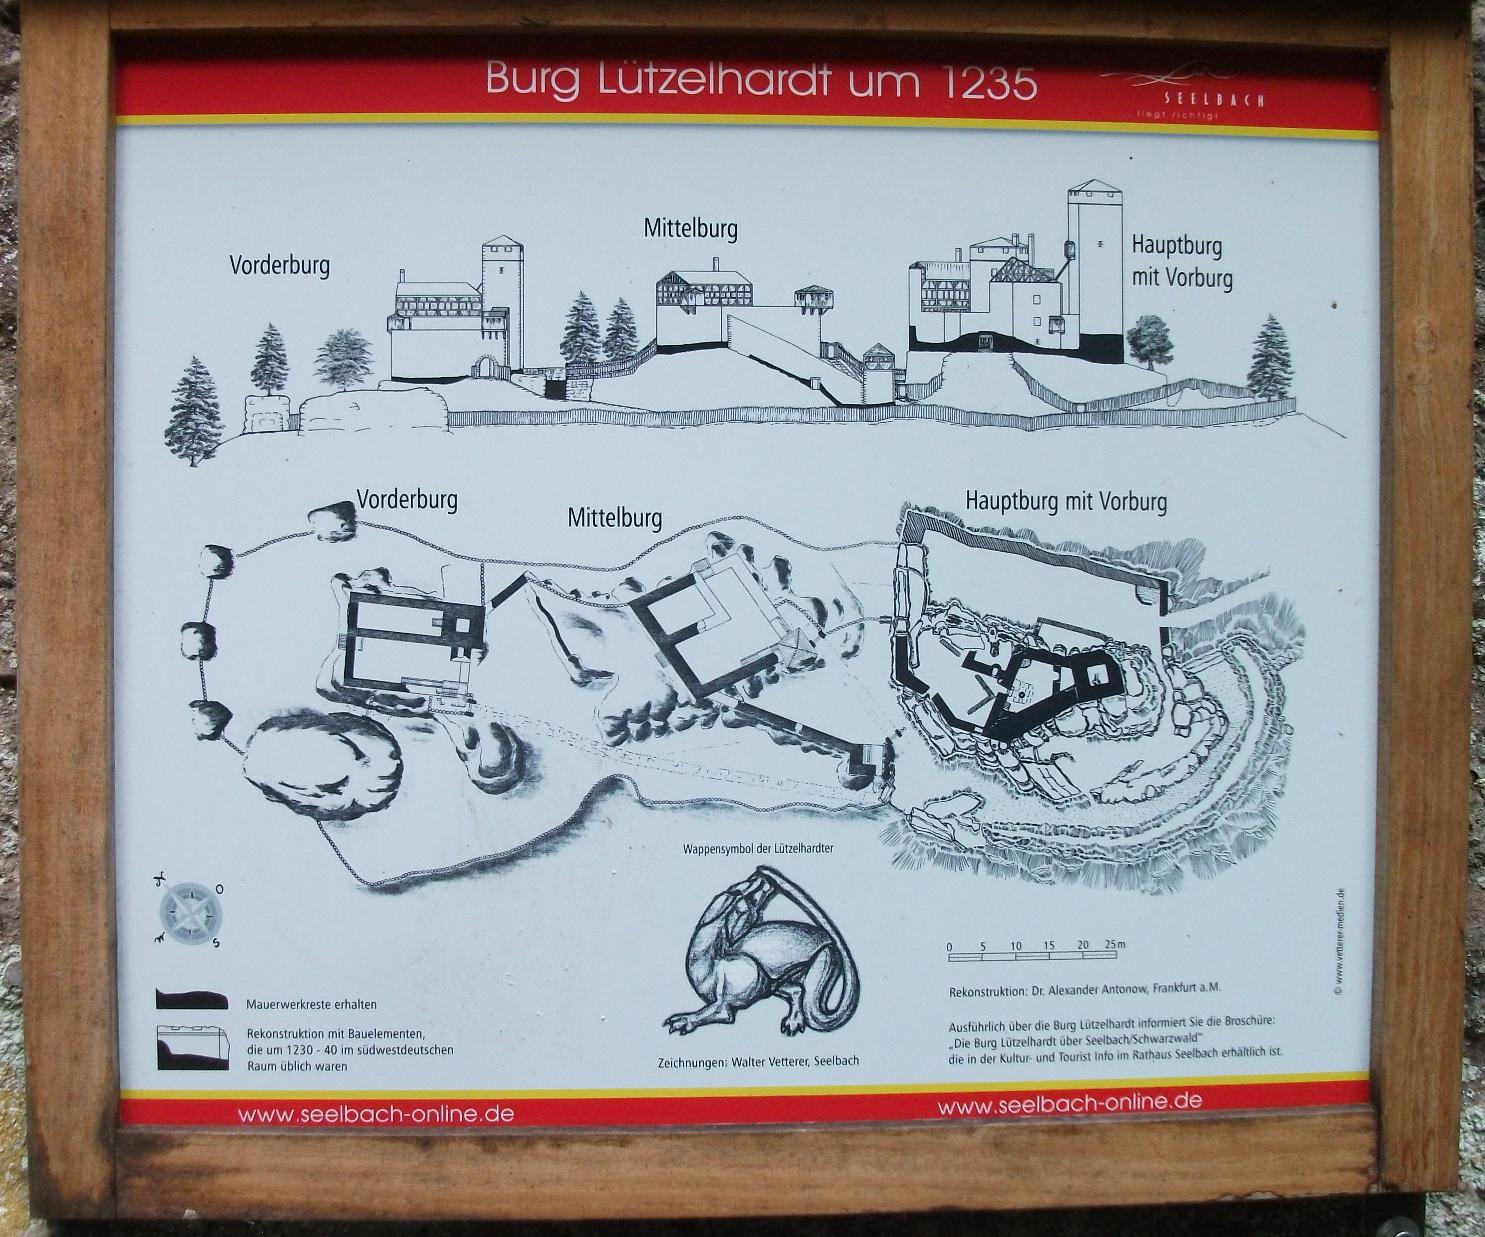 Burgruine Luetzelhardt